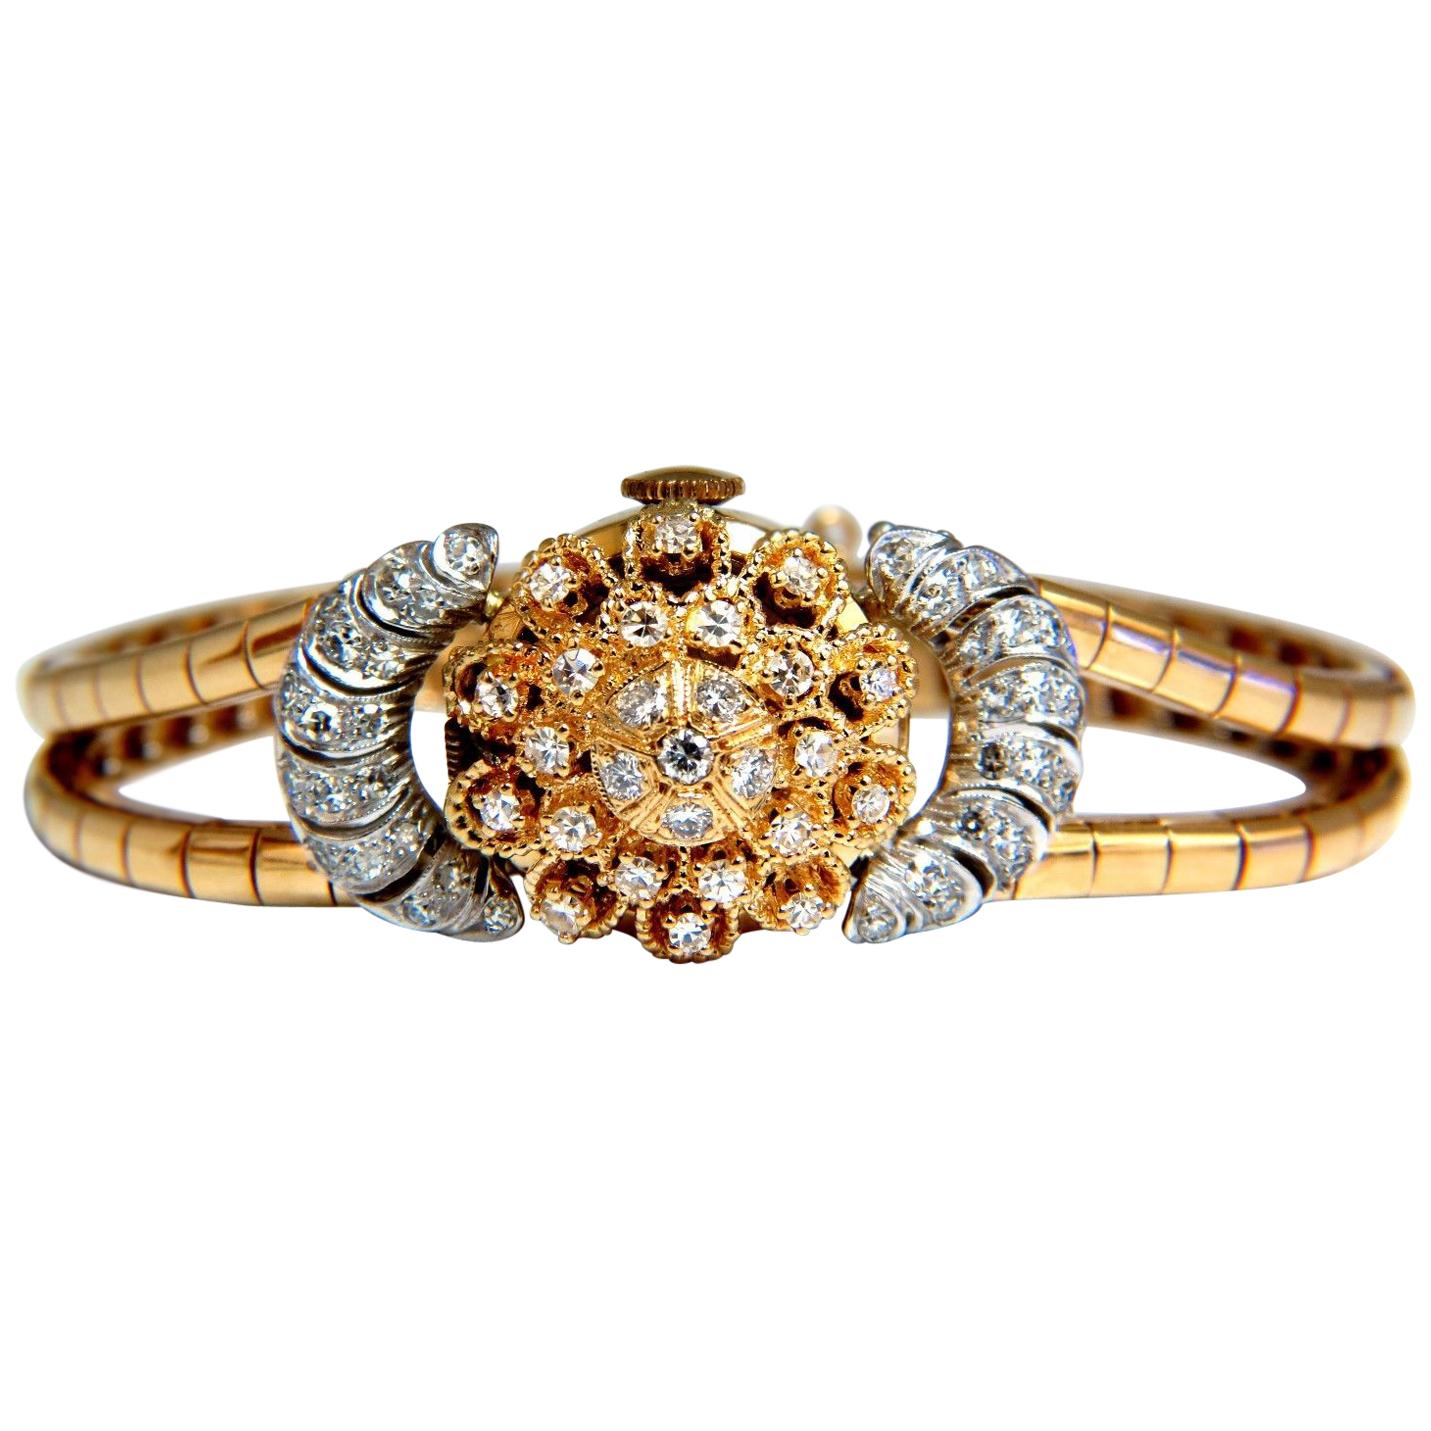 Vintage Hamilton Ladies Diamond Watch 14 Karat. 1.00 Carat Diamonds